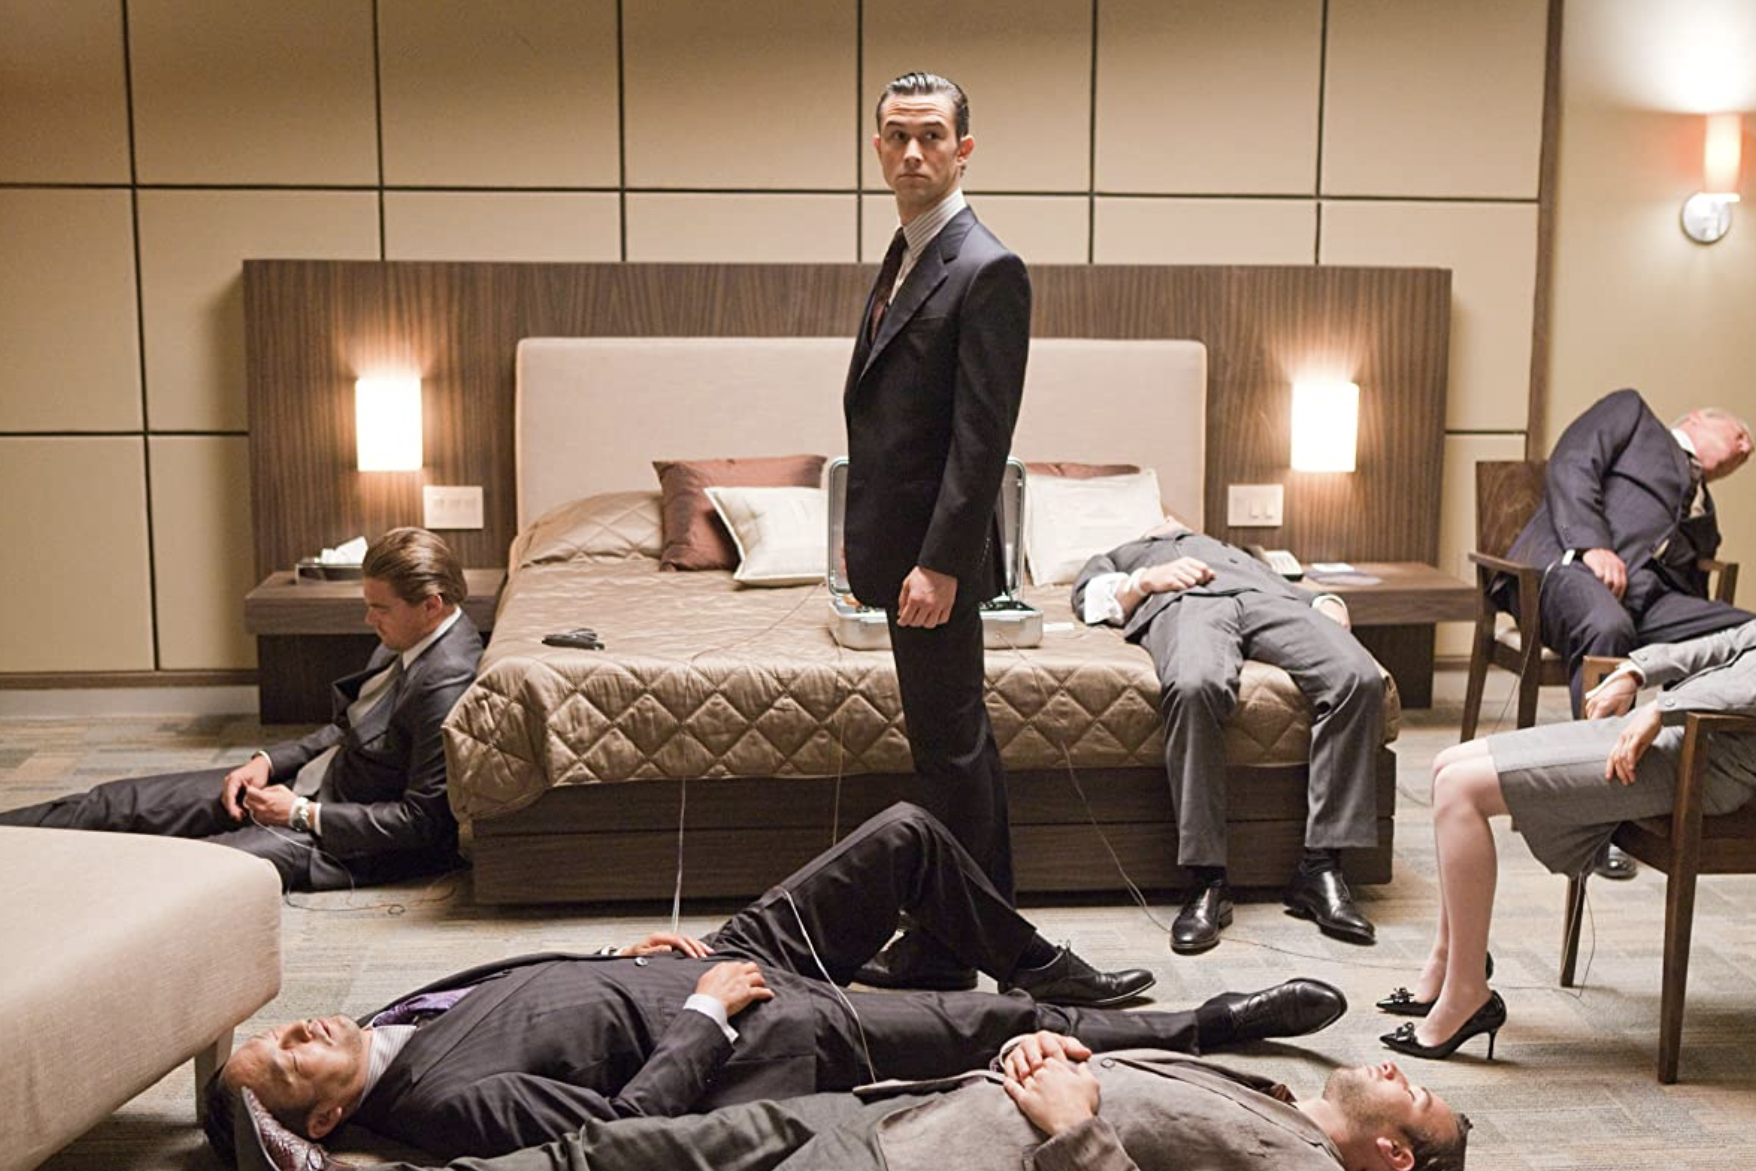 Joseph Gordon Levitt stands in a nice suit amid sleeping people